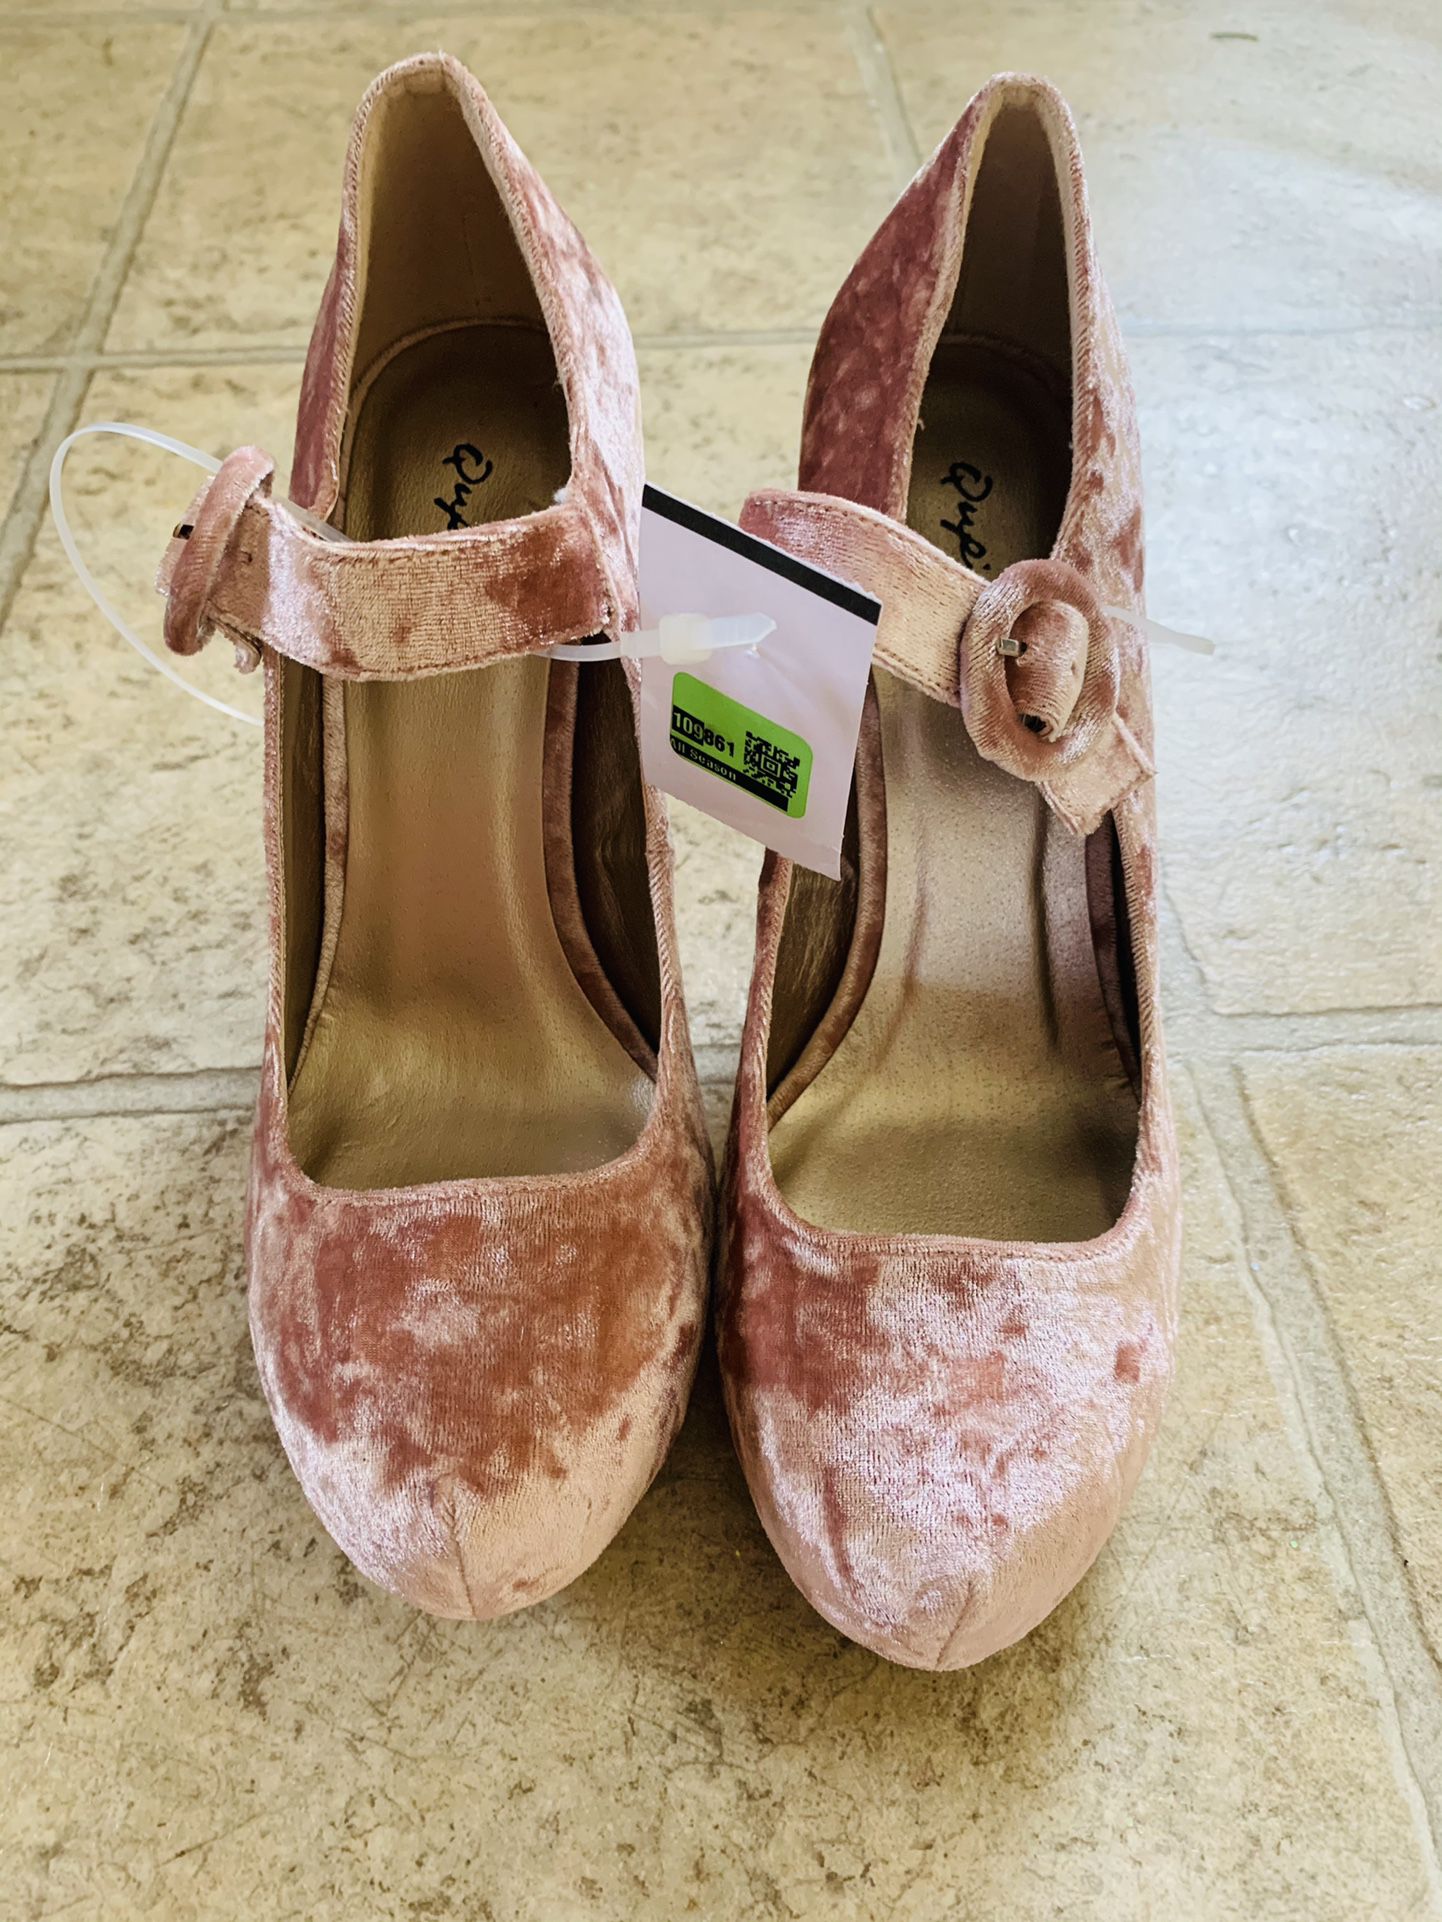 Qupid velvet pink women shoes high heel size 8 